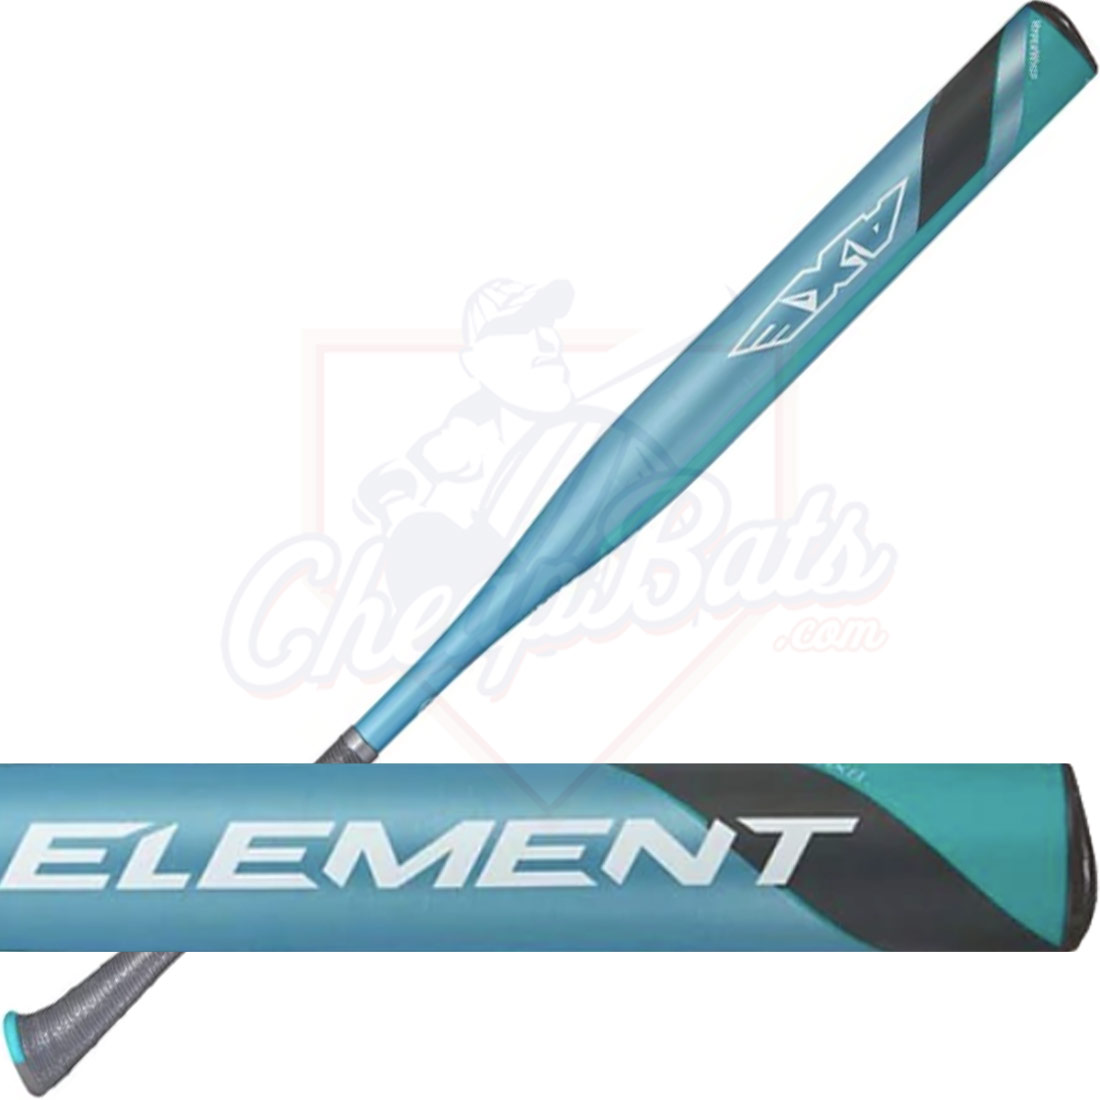 2022 Axe Element Fastpitch Softball Bat -12oz L151J